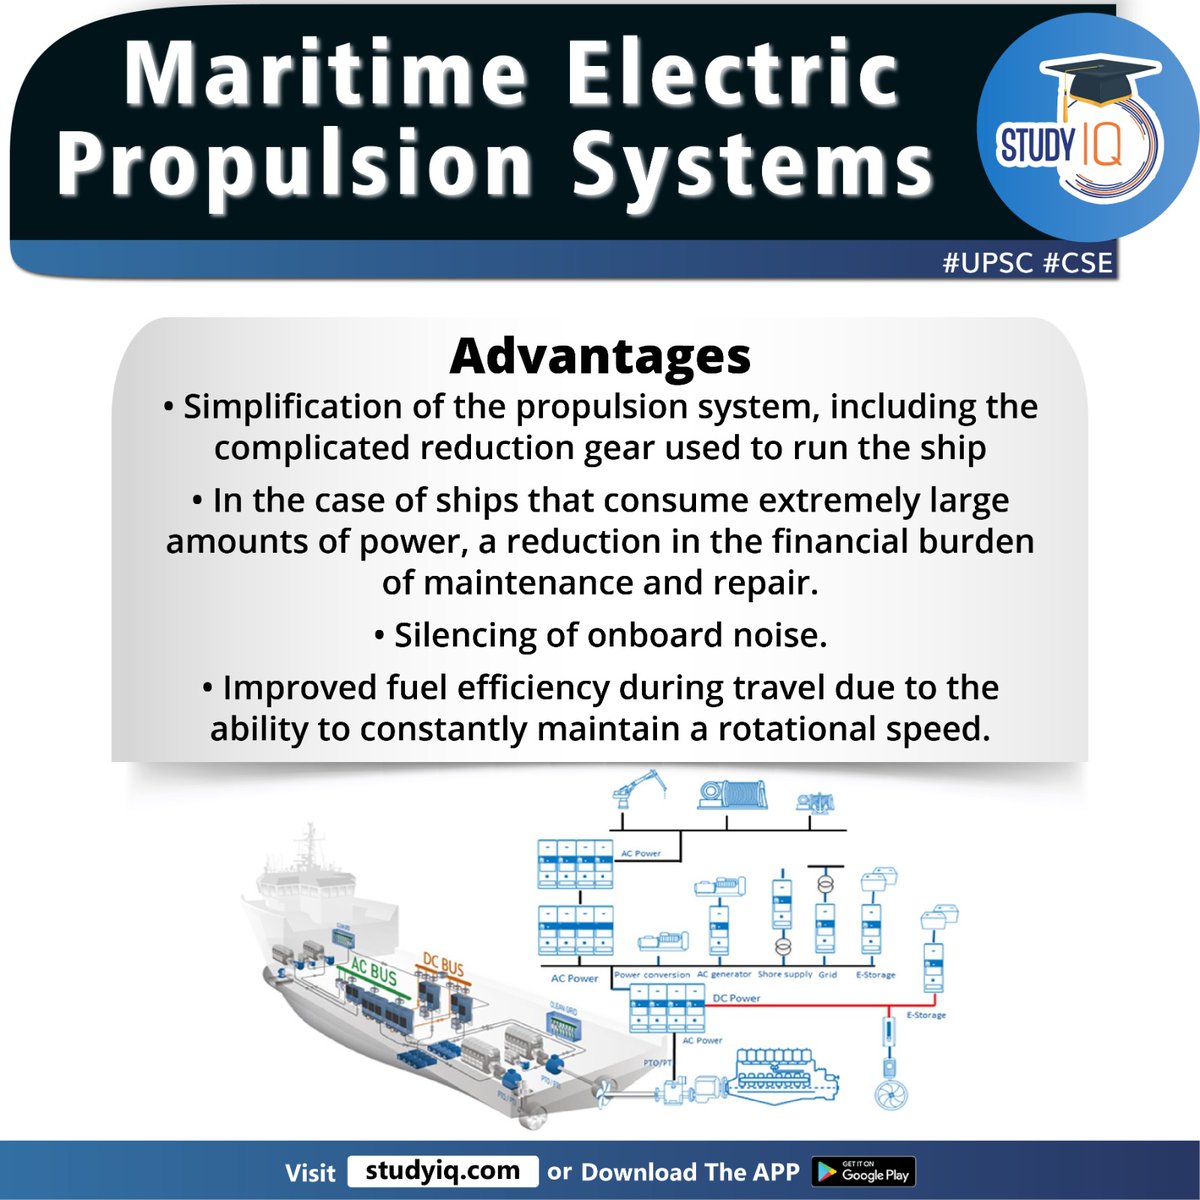 Maritime Electric Propulsion Systems

#maritimeelectricpropulsionsystems #whyinnews #electricpropulsionsystems #india #uk #ships #propulsionengine #shipboardgenerators #electricalpower #finanicalburden #upsc #cse #ips #ias